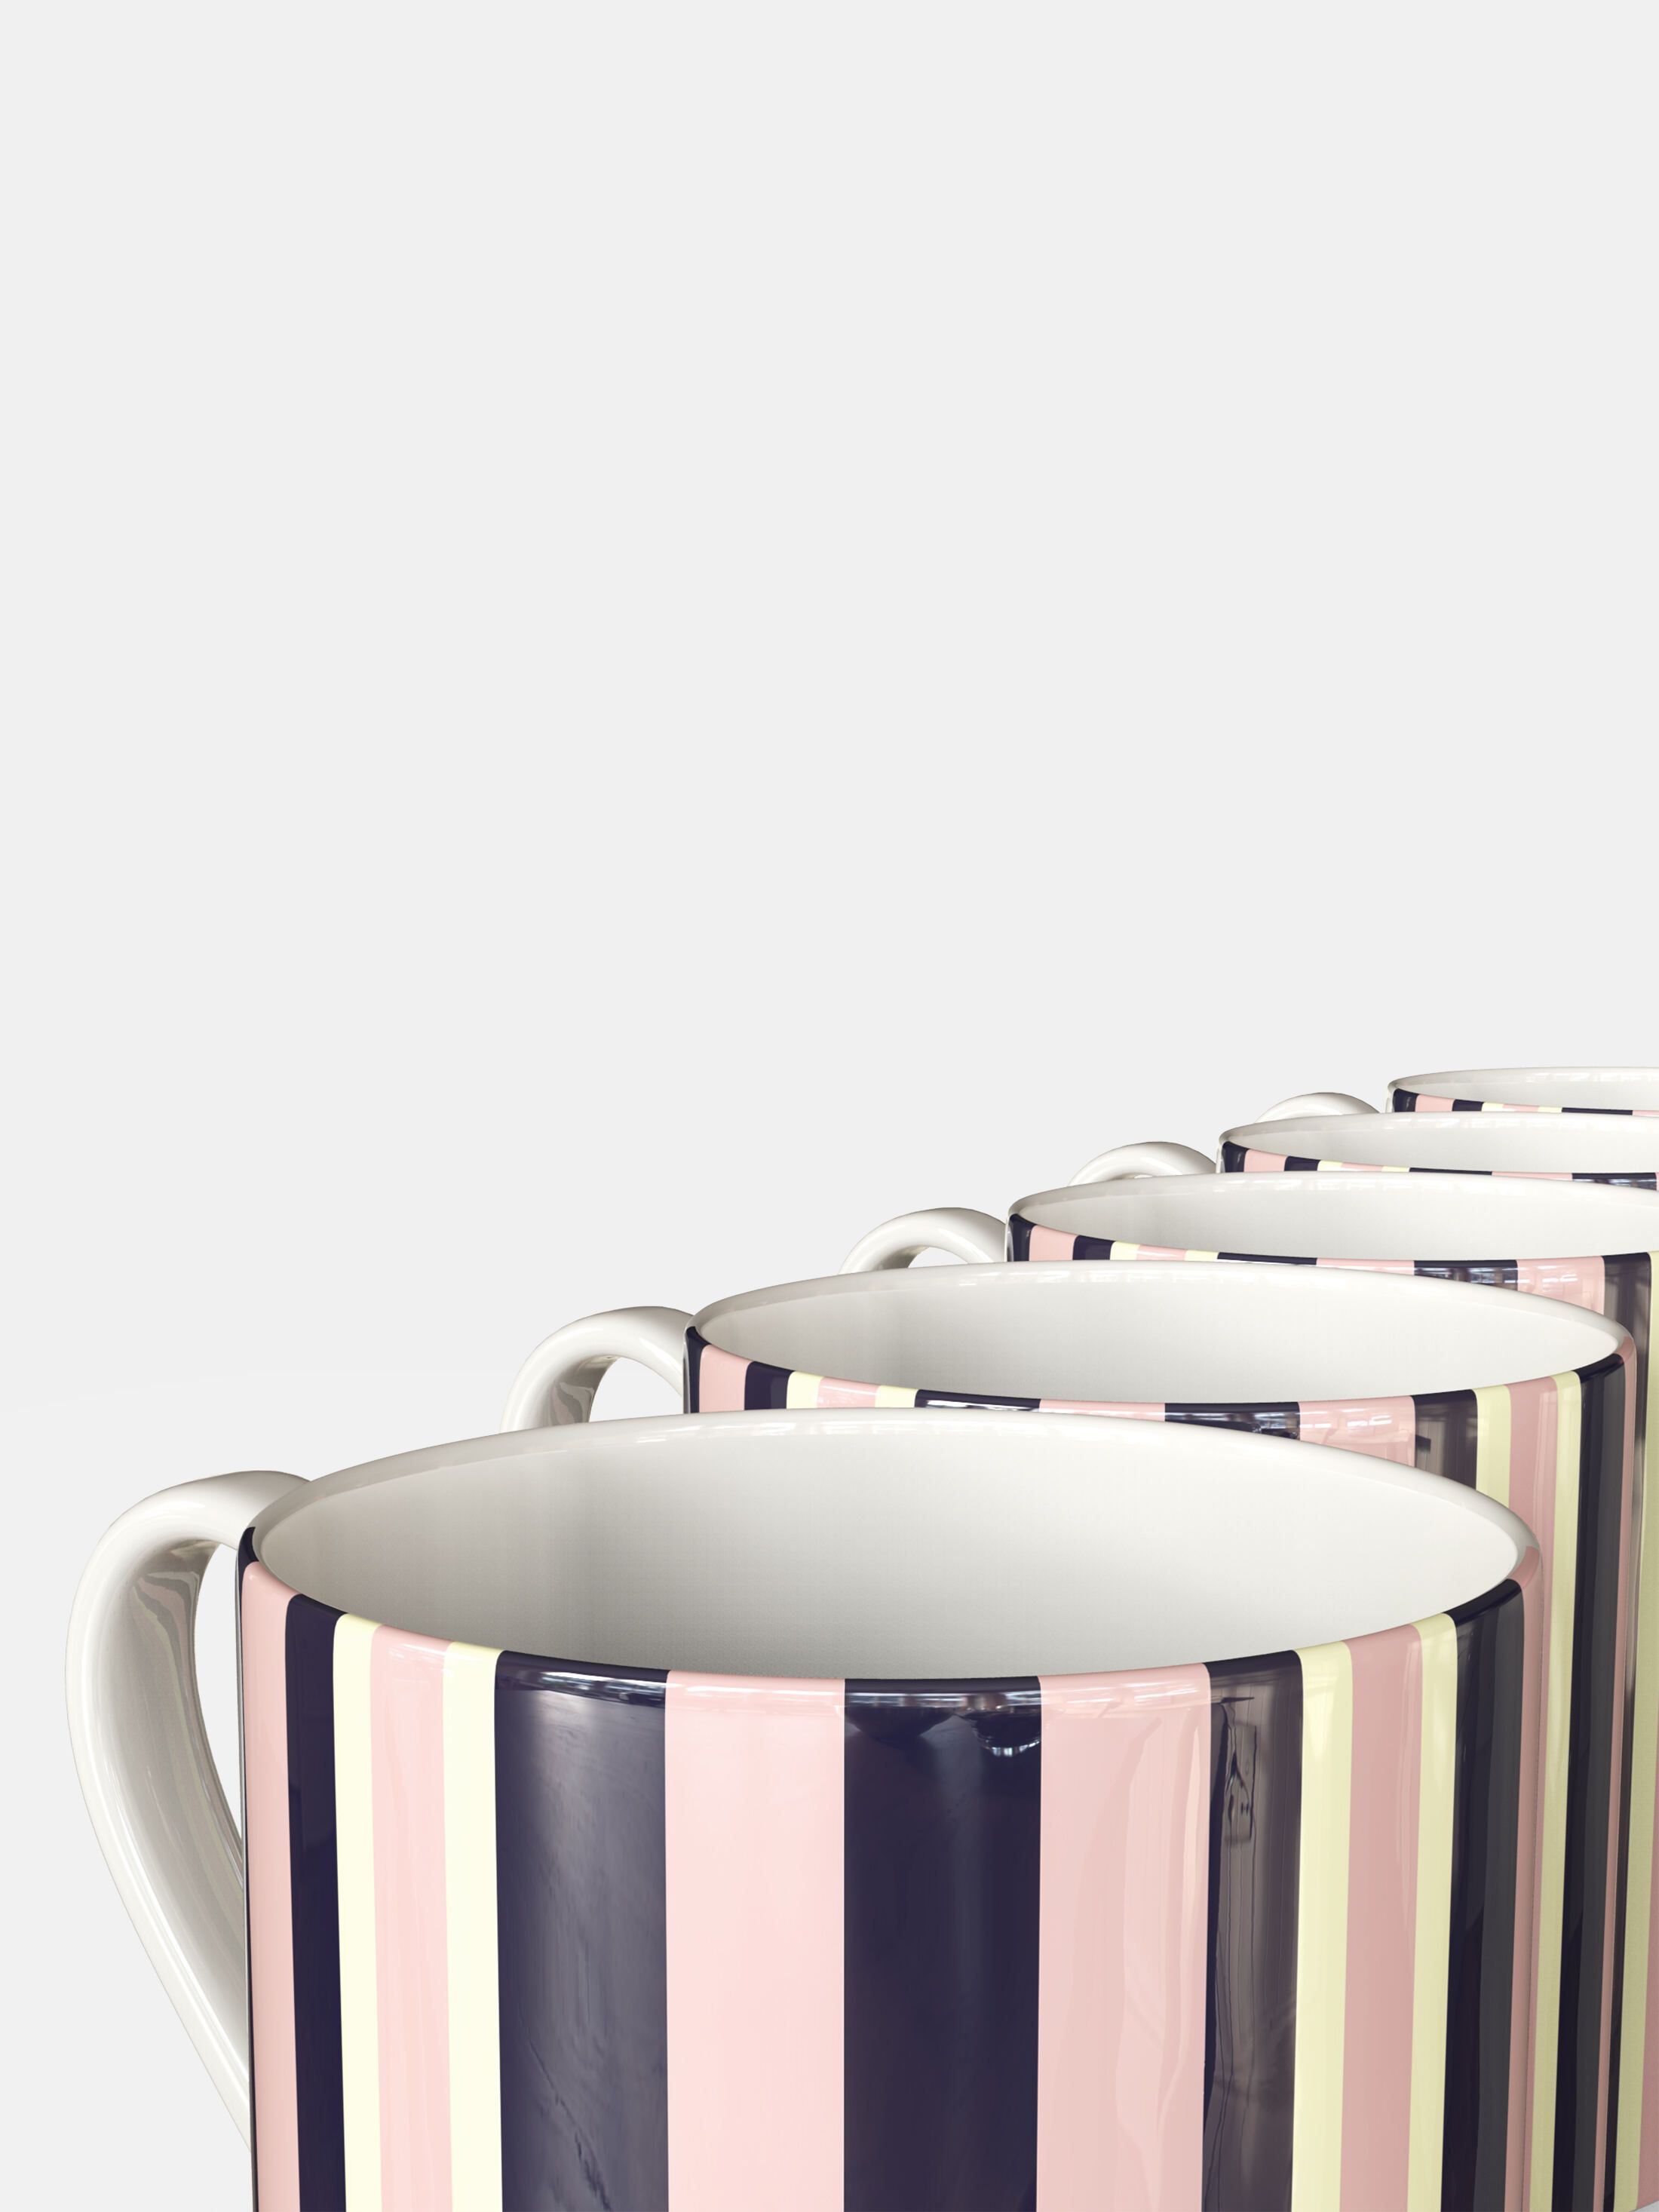 wholesale espresso cups